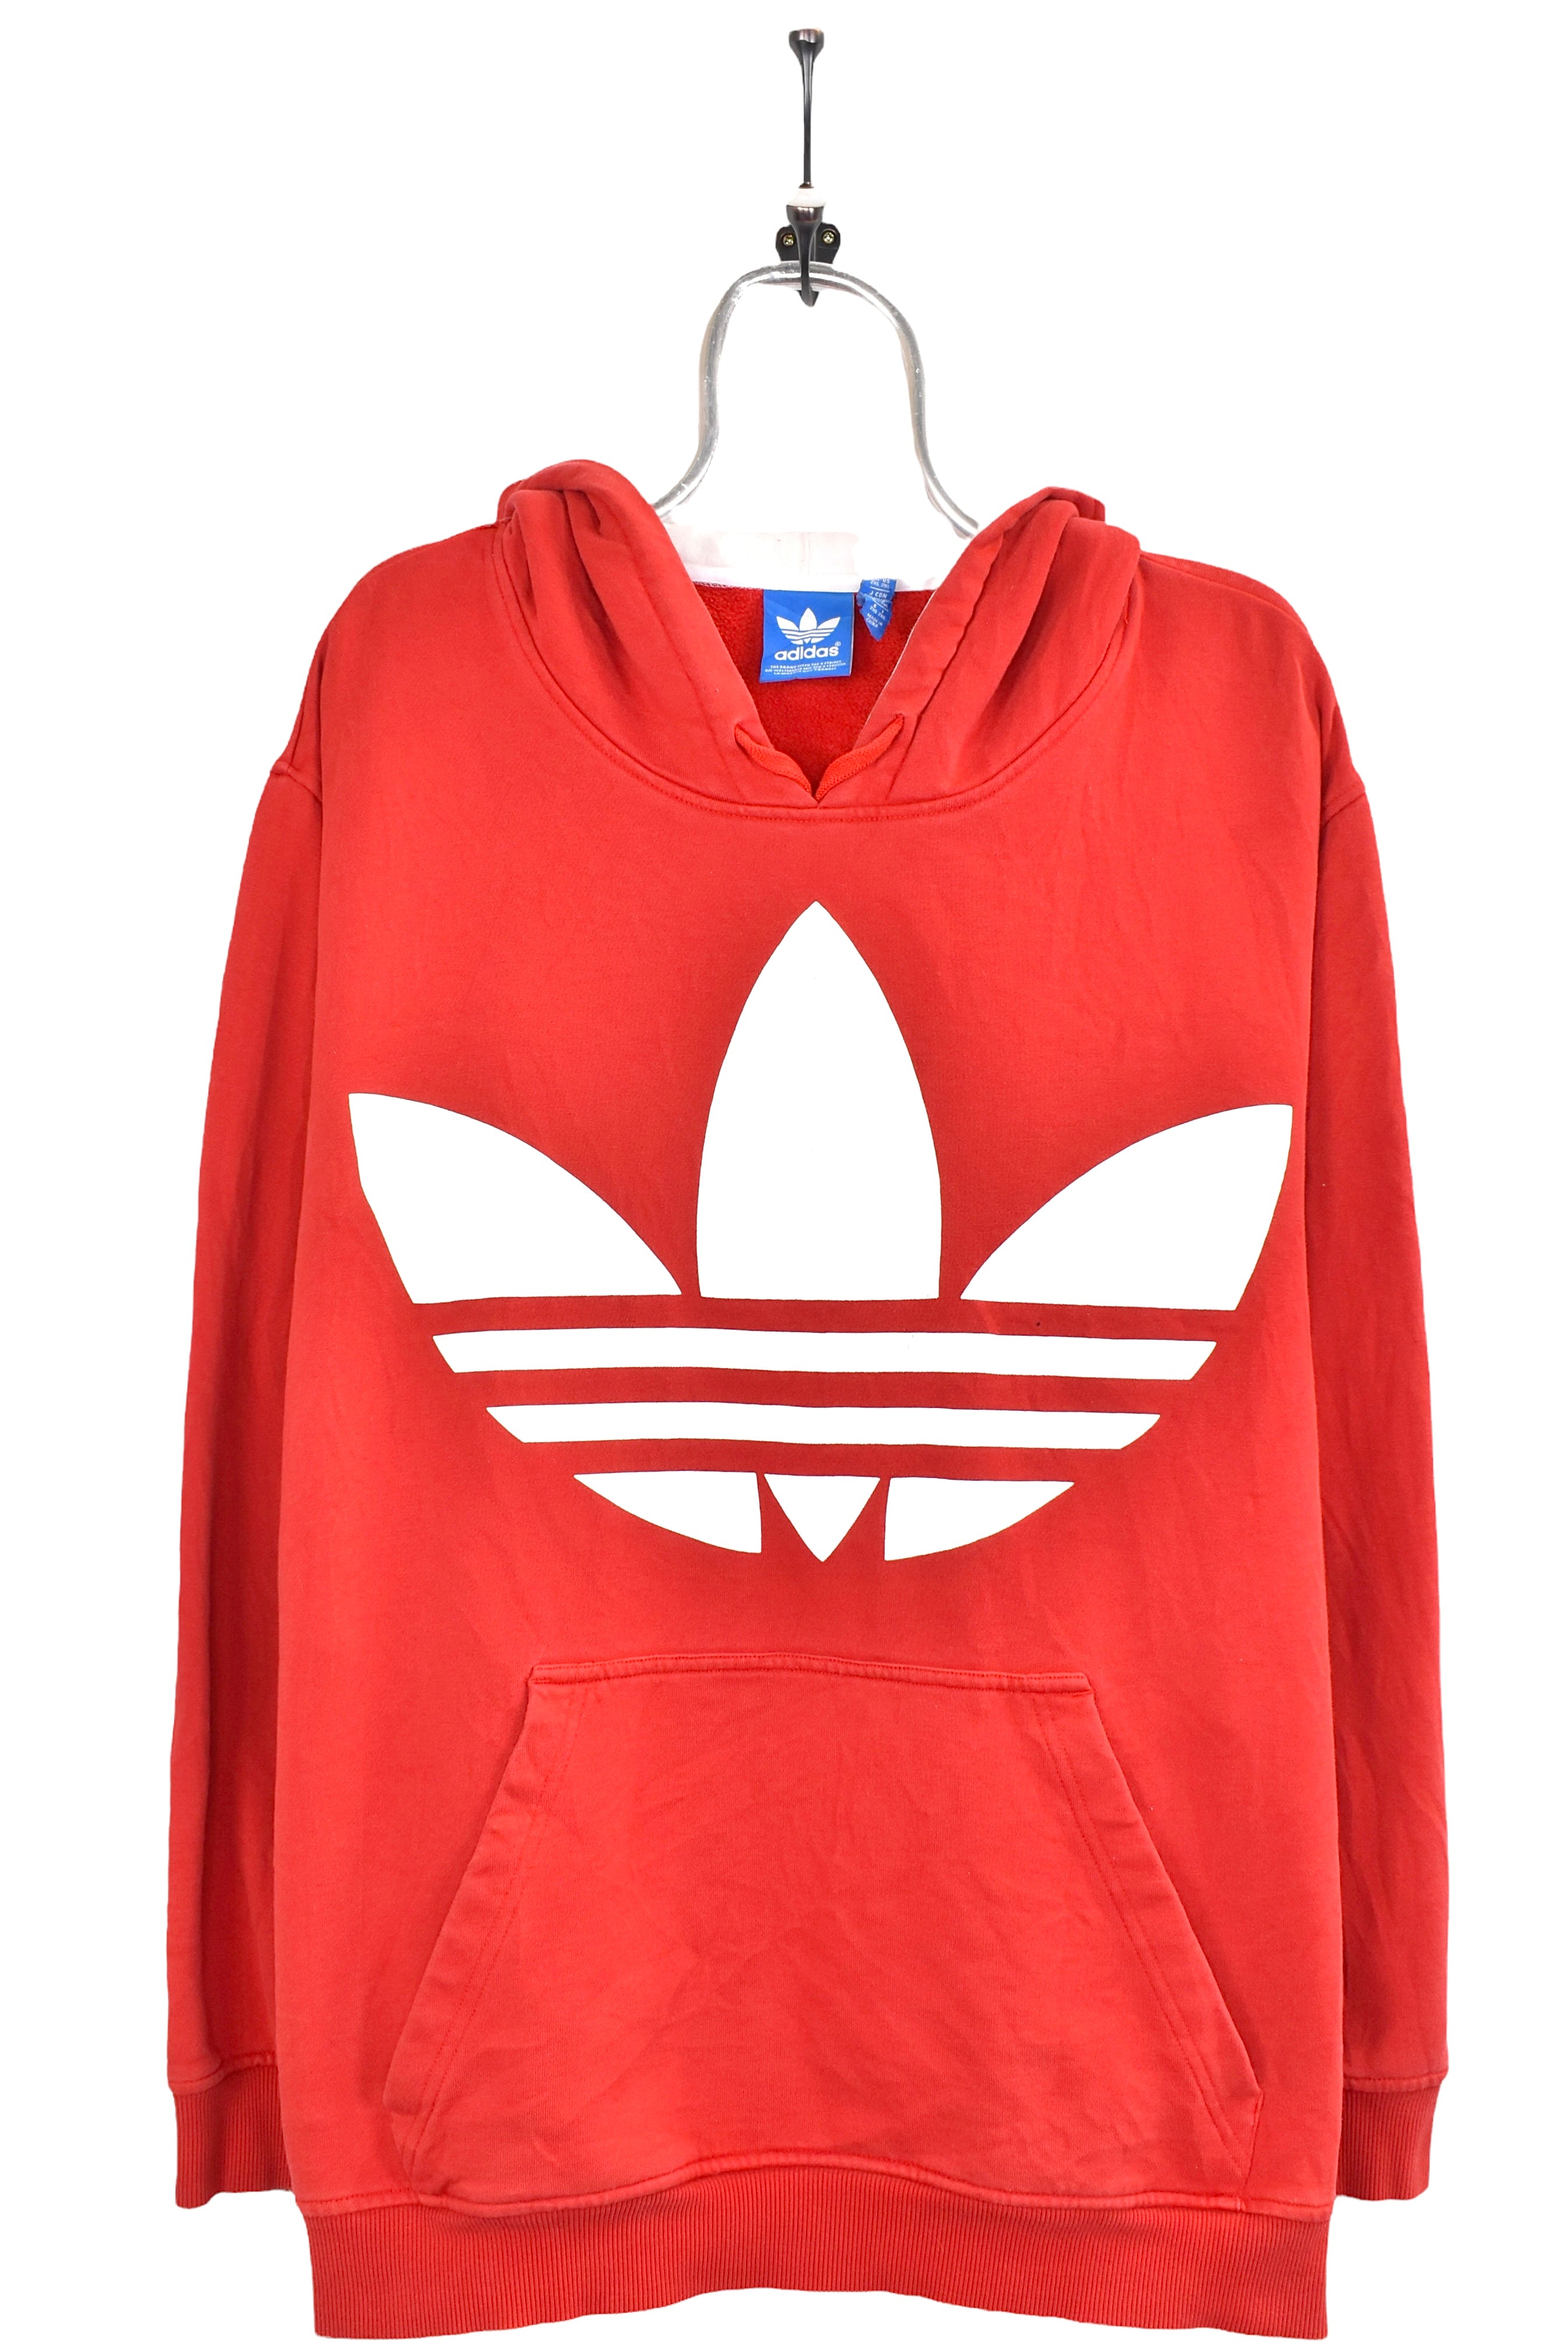 Vintage Adidas hoodie, red graphic sweatshirt - AU XXL ADIDAS